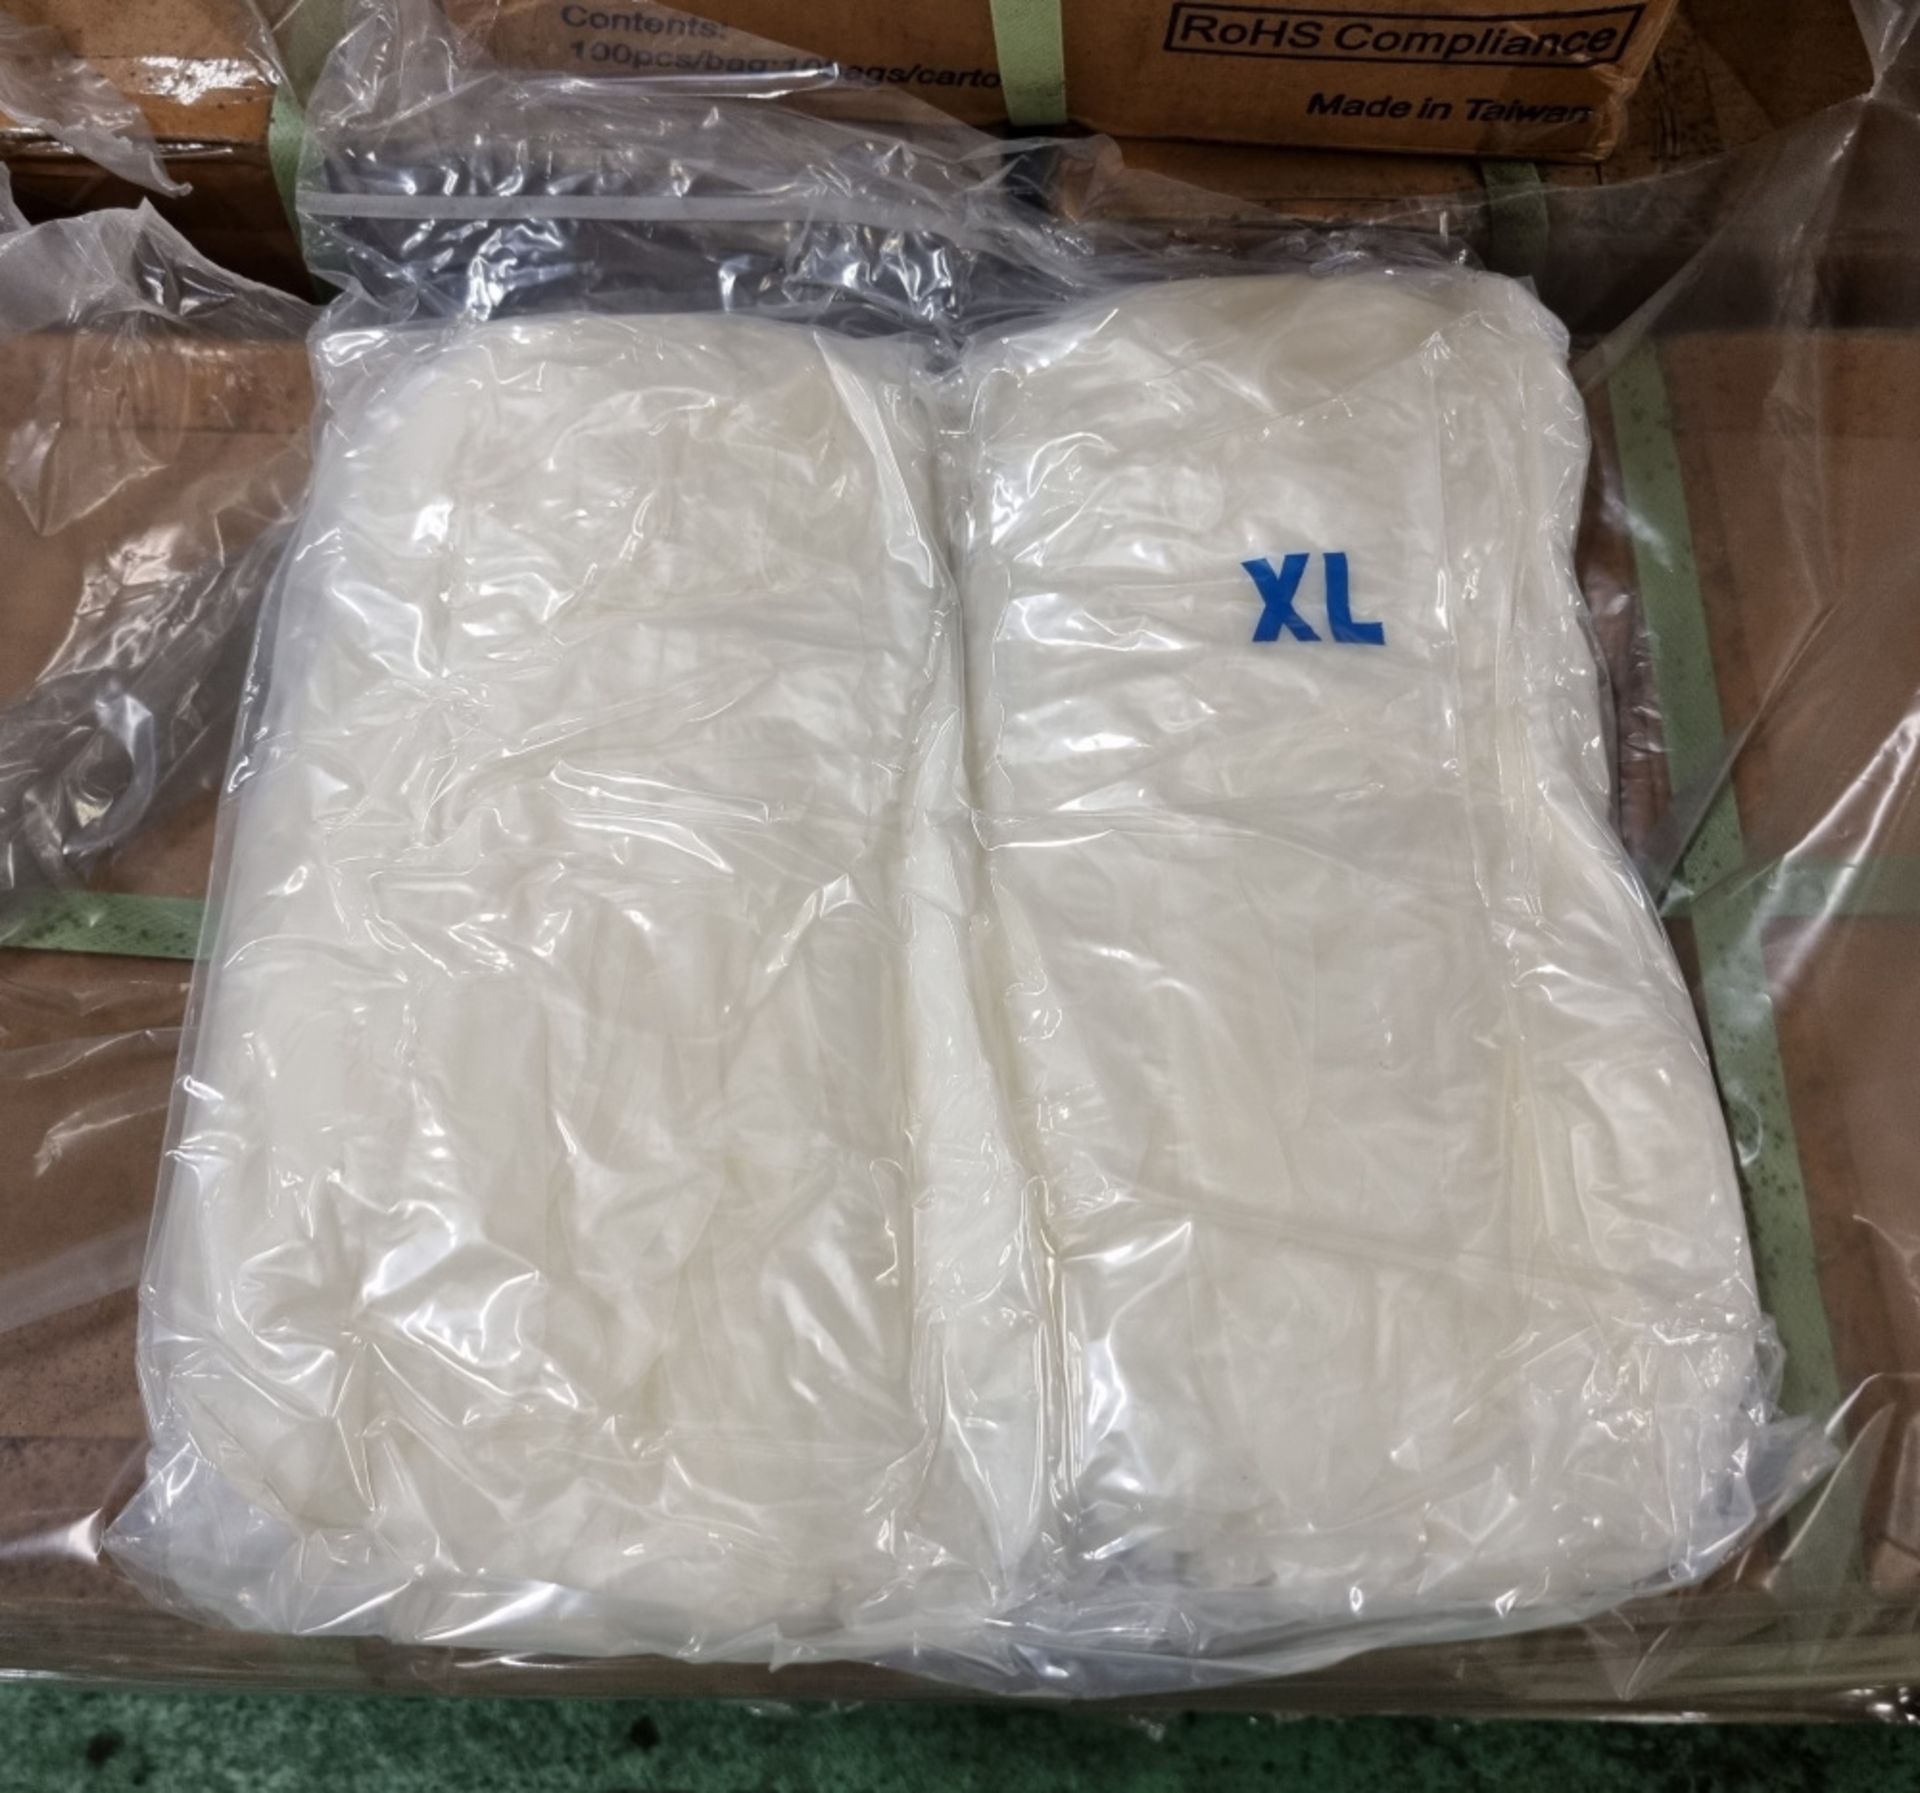 LTKV800 disposable vinyl gloves - XL - 100 per bag - 10 bags per box - 36 boxes - Image 2 of 3